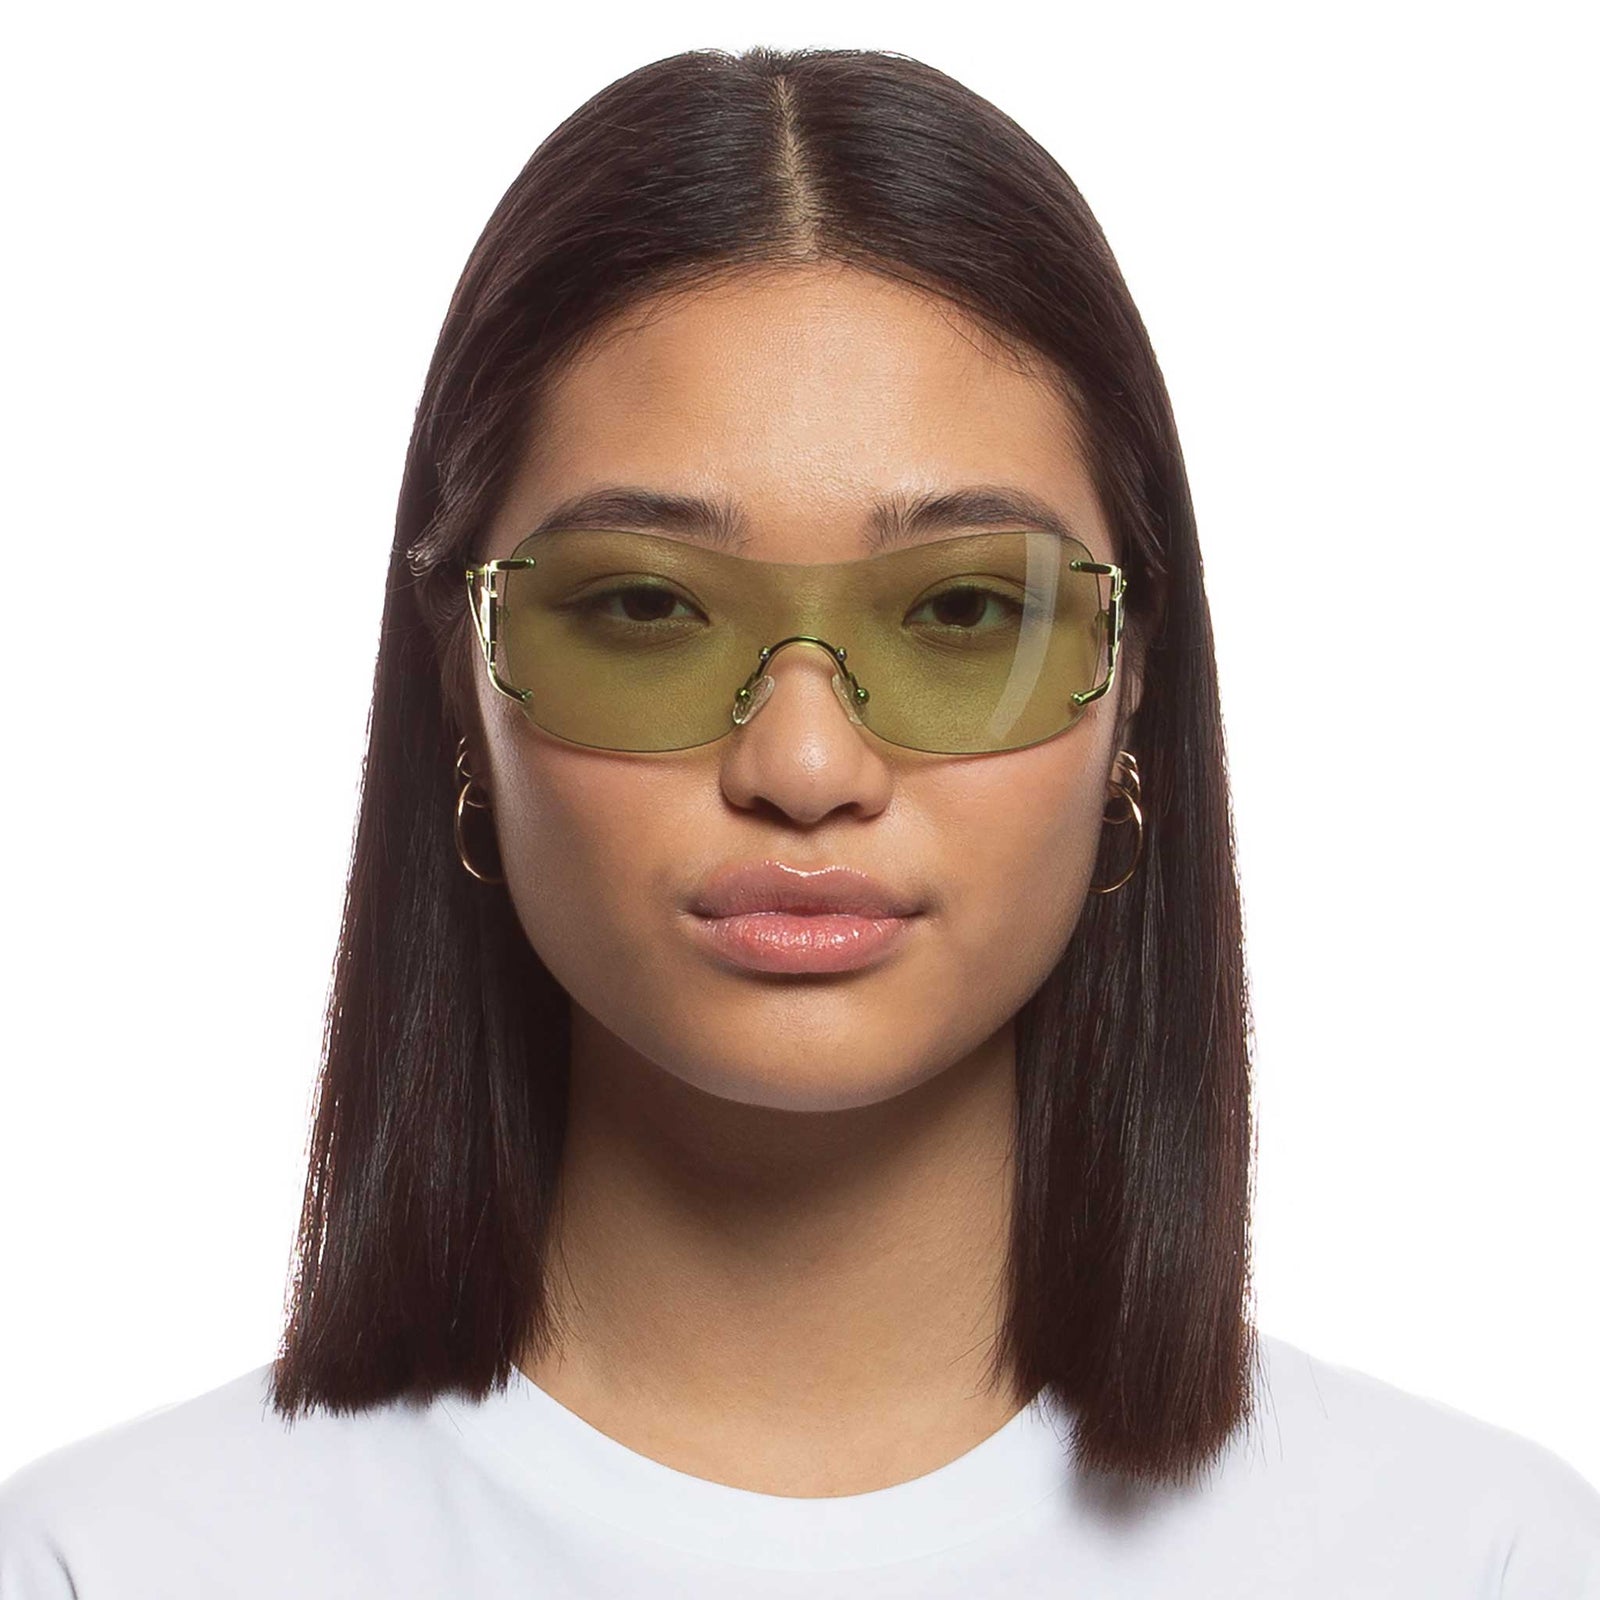 Sale: Sunglasses Escadrille Bright Gold of LE SPECS at myClassico - Premium  Fashion Online Shop